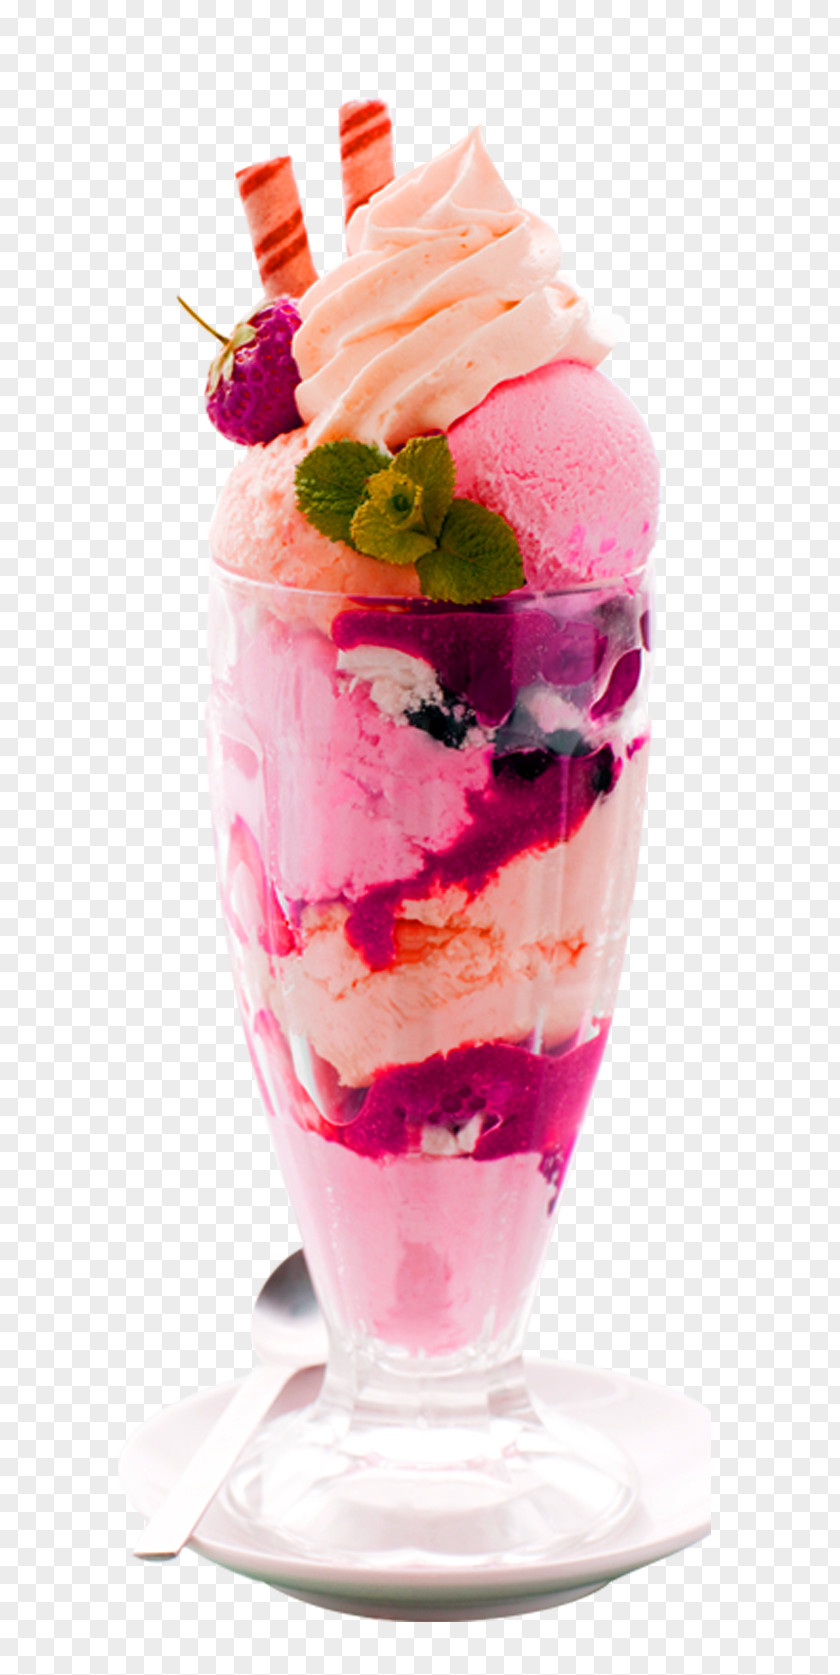 Strawberry Ice Cream Decorative Patterns Sundae Smoothie Milkshake PNG